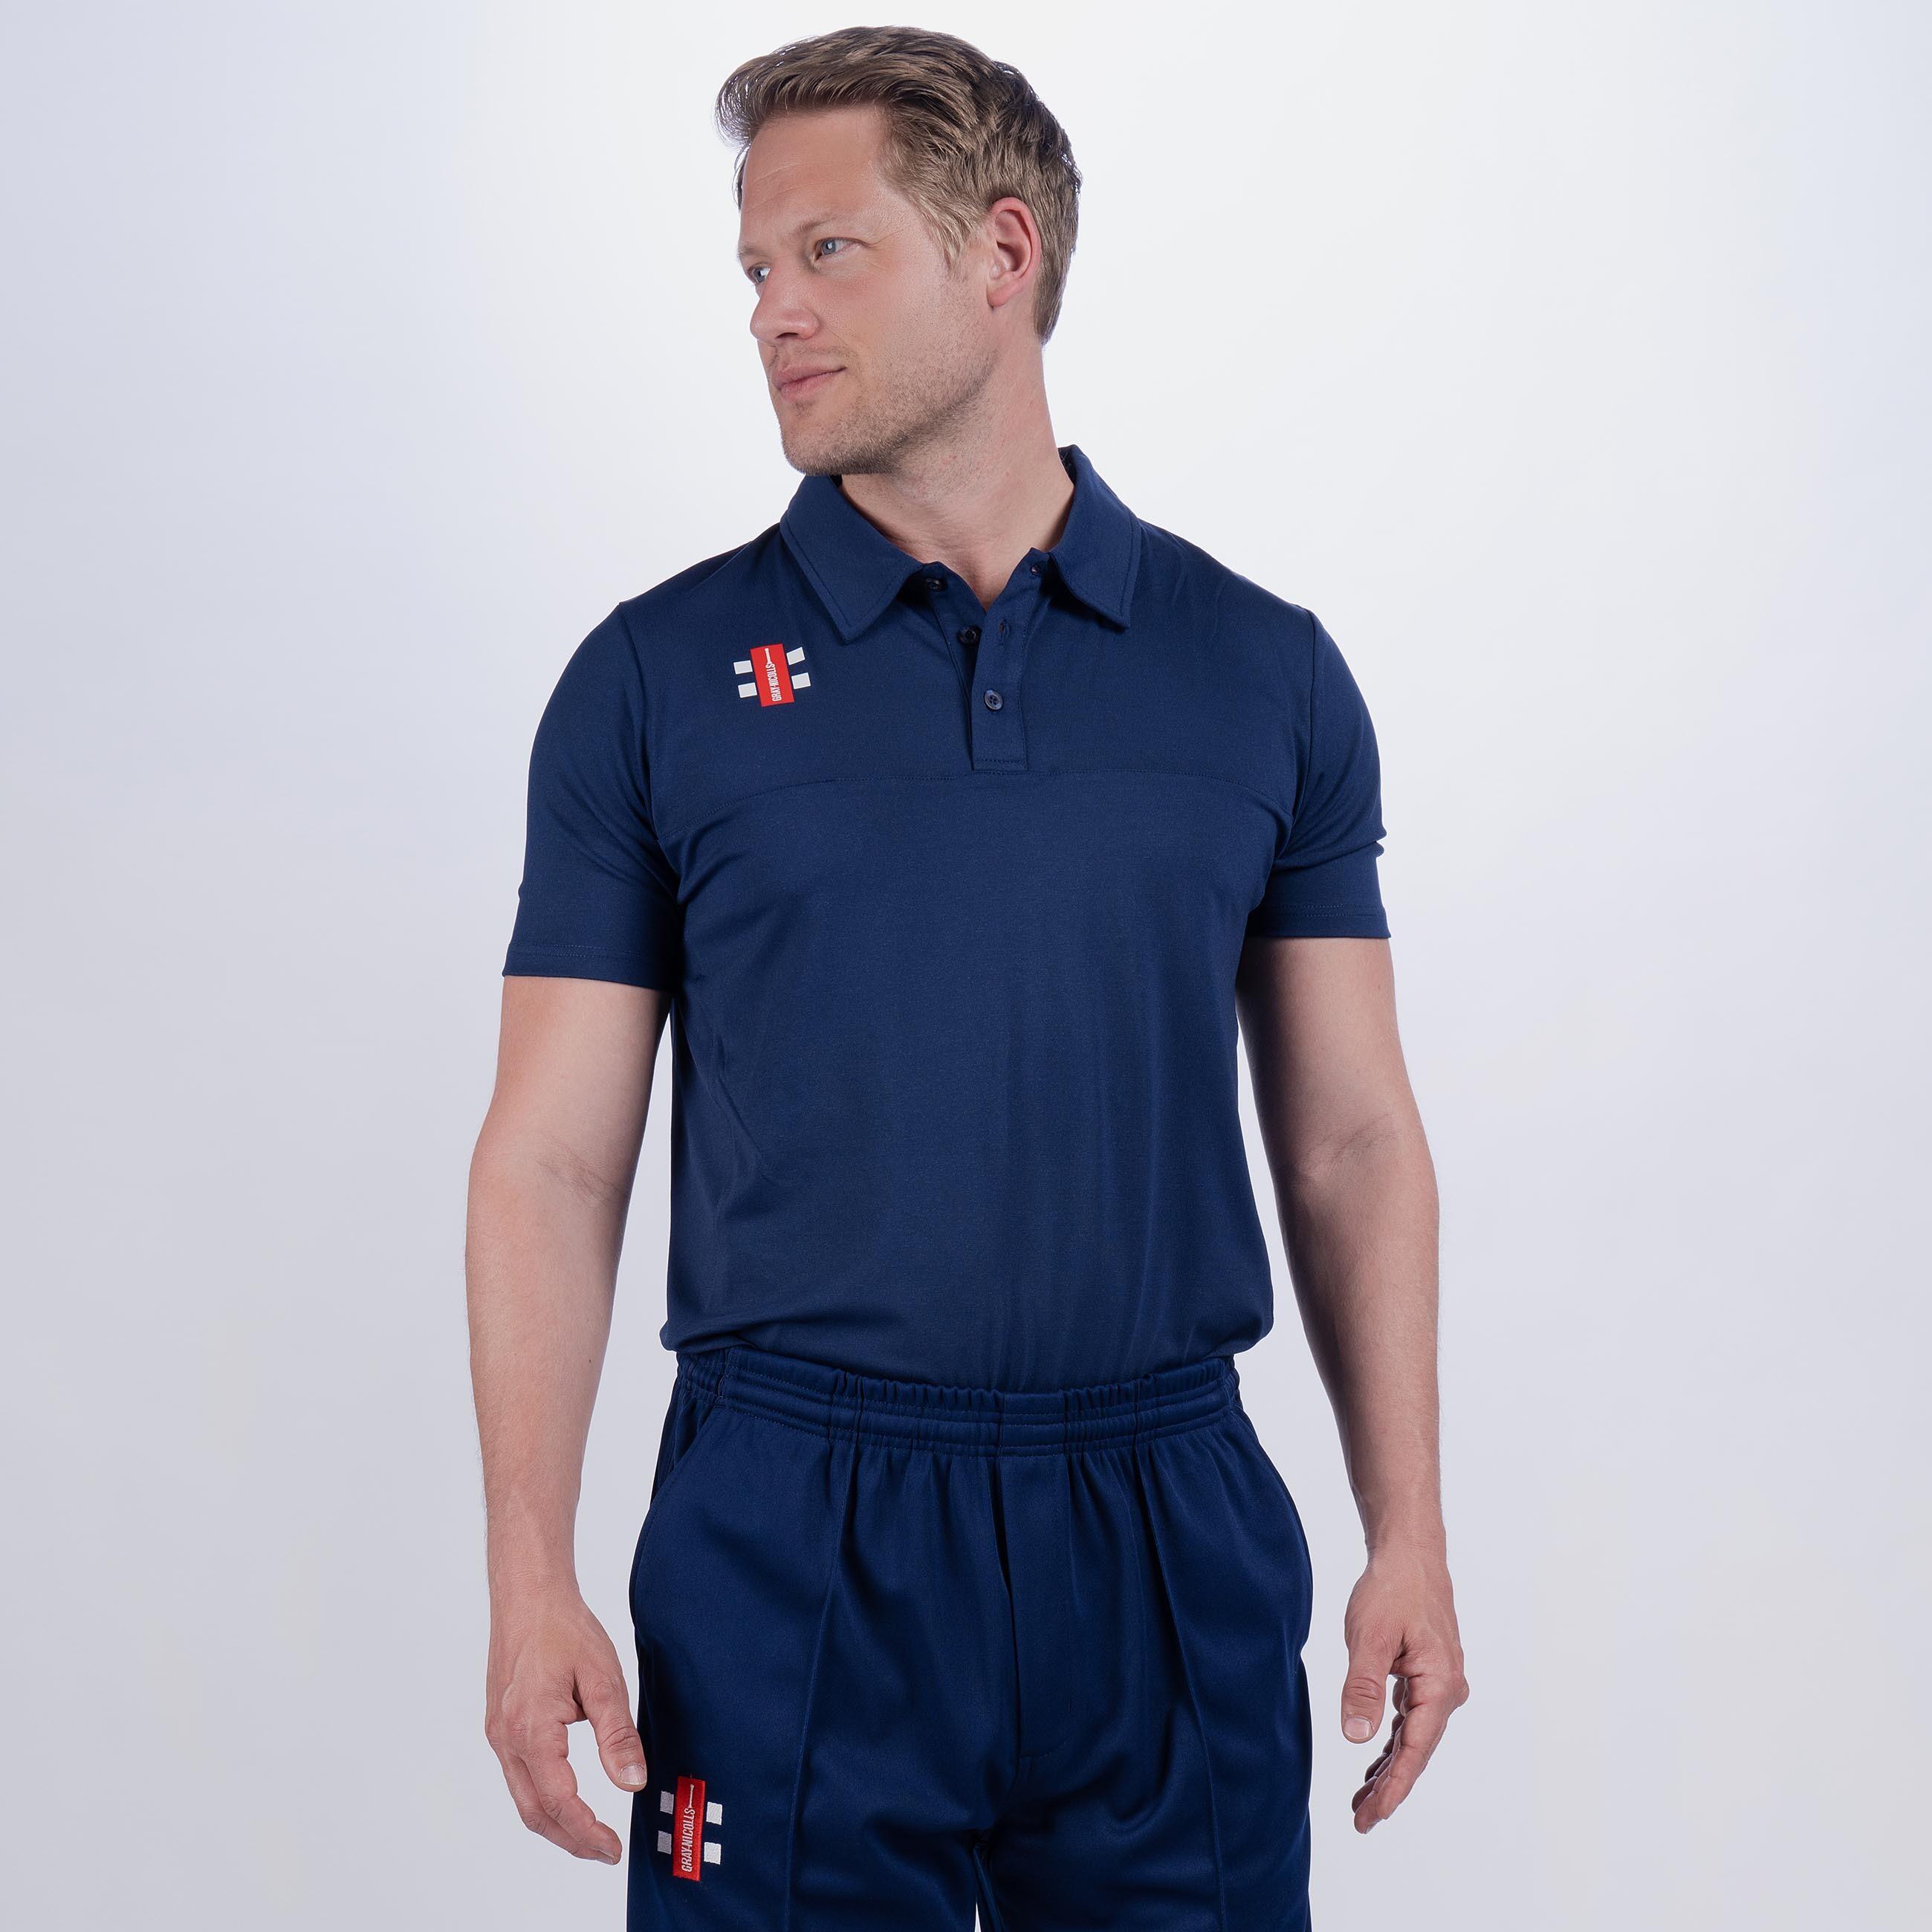 GRAY-NICOLLS Pro Performance Polo Shirt, Navy